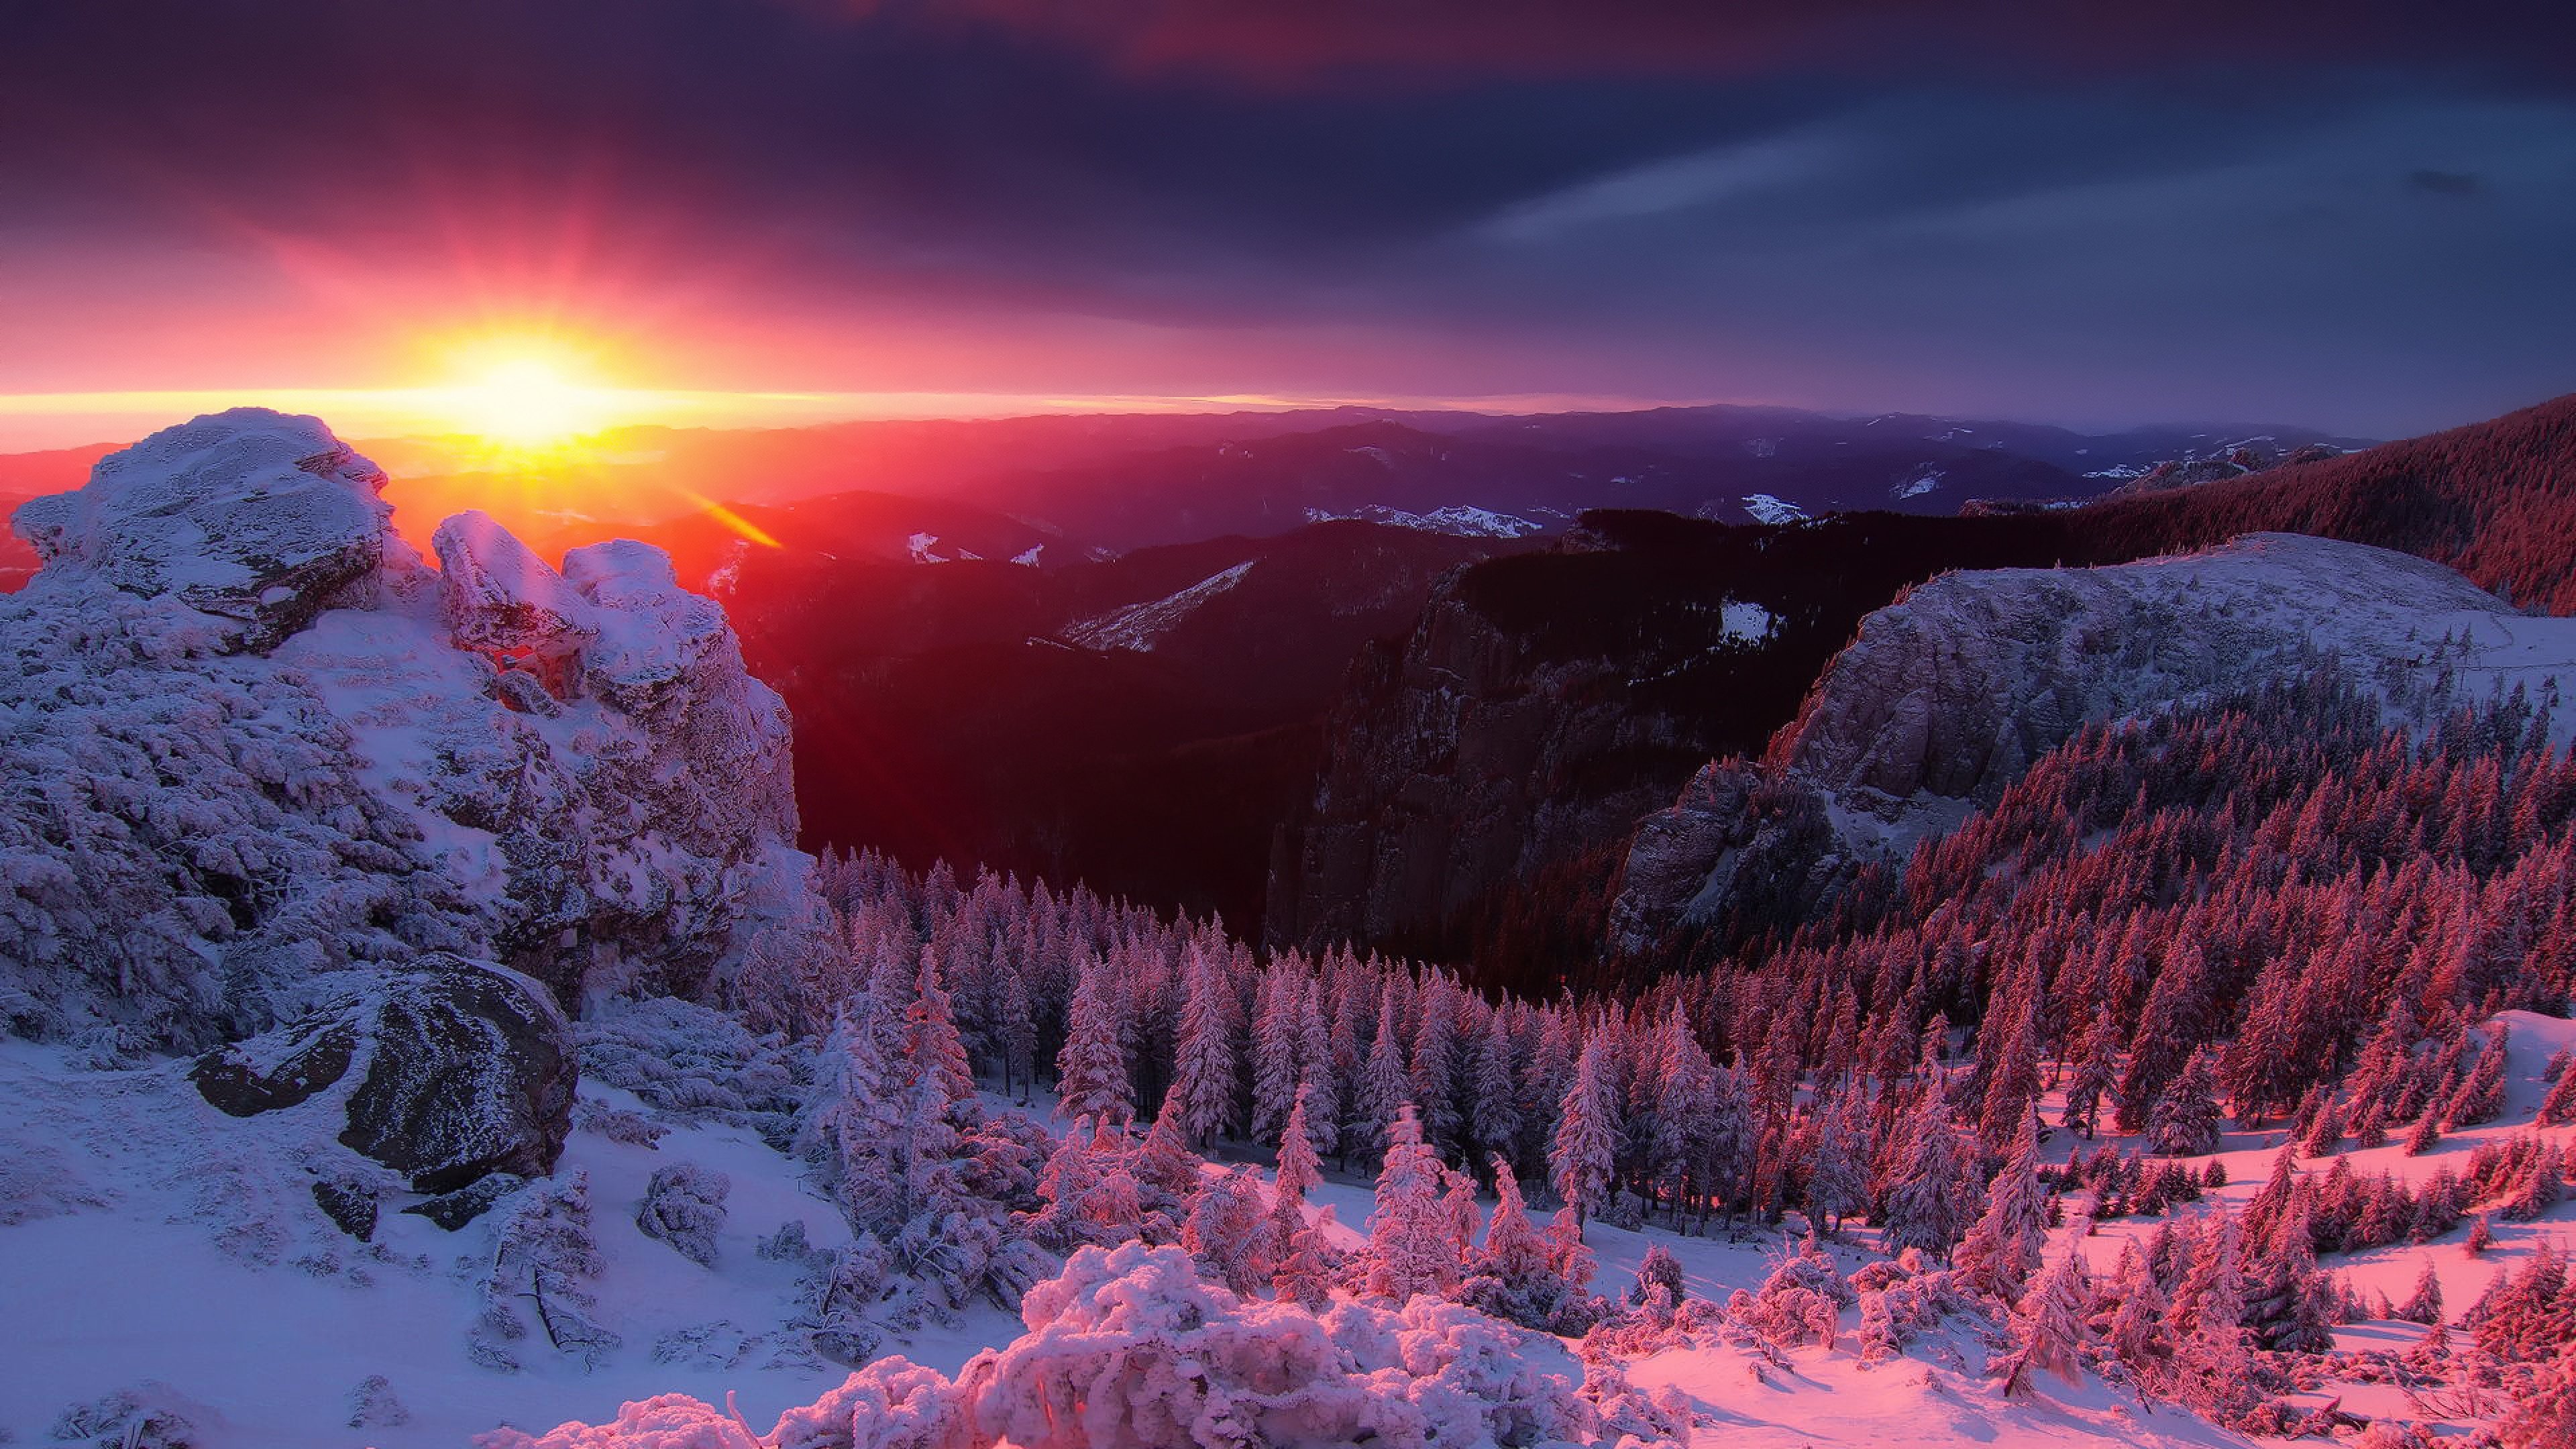 Download Wallpaper 3840x2160 Alps Mountains Winter Sunset 4K Ultra 3840x2160